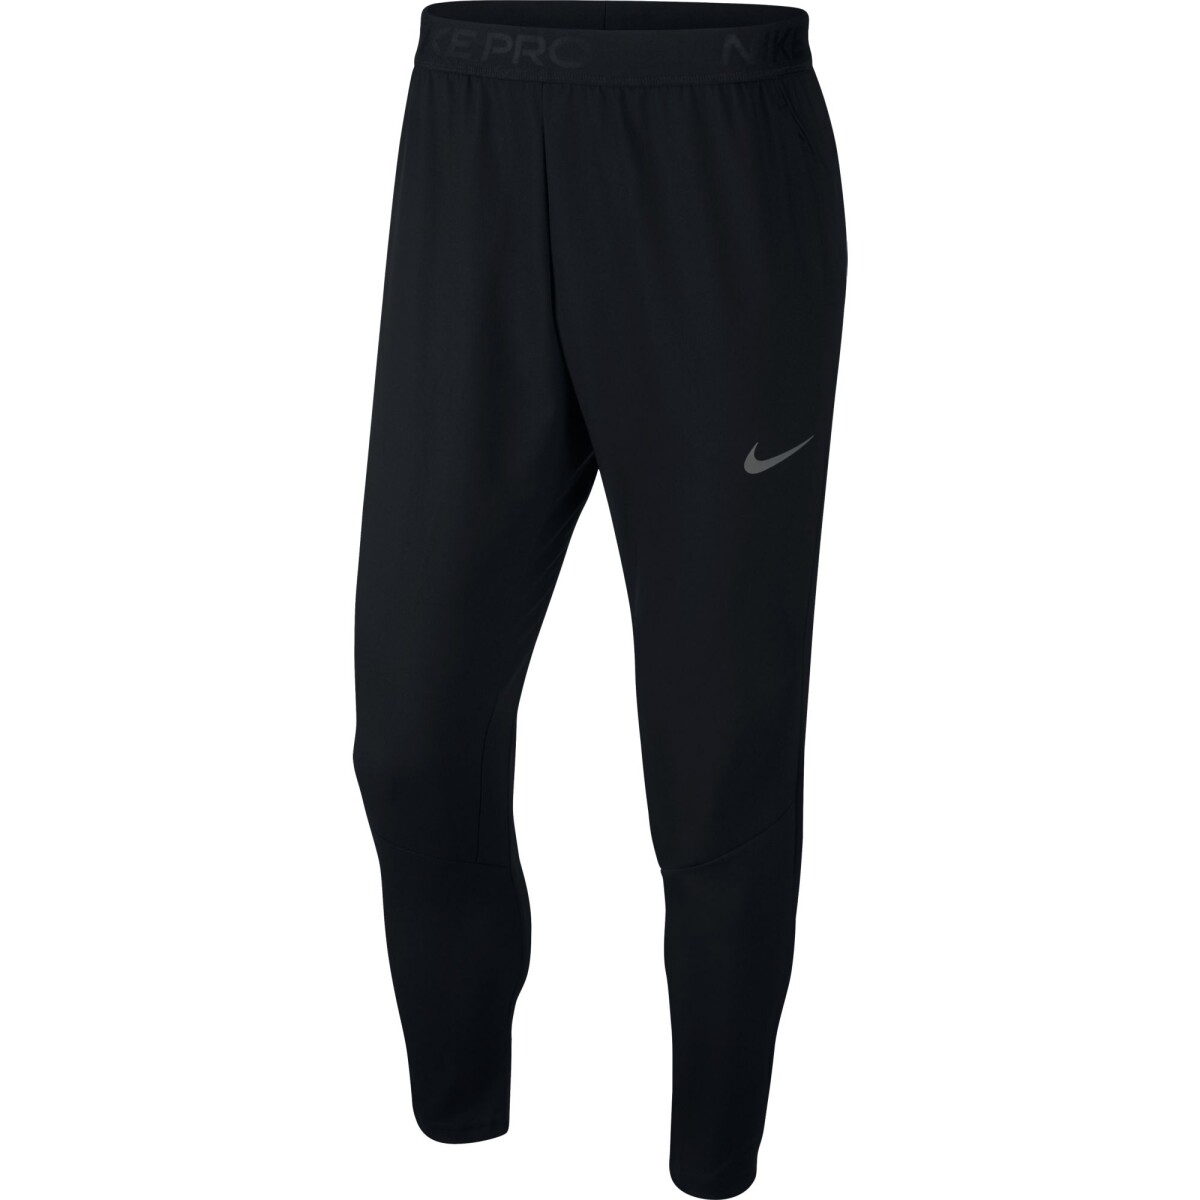 Pantalon Nike Traninig Hombre Df Flex Vent Max Pant Black - S/C 